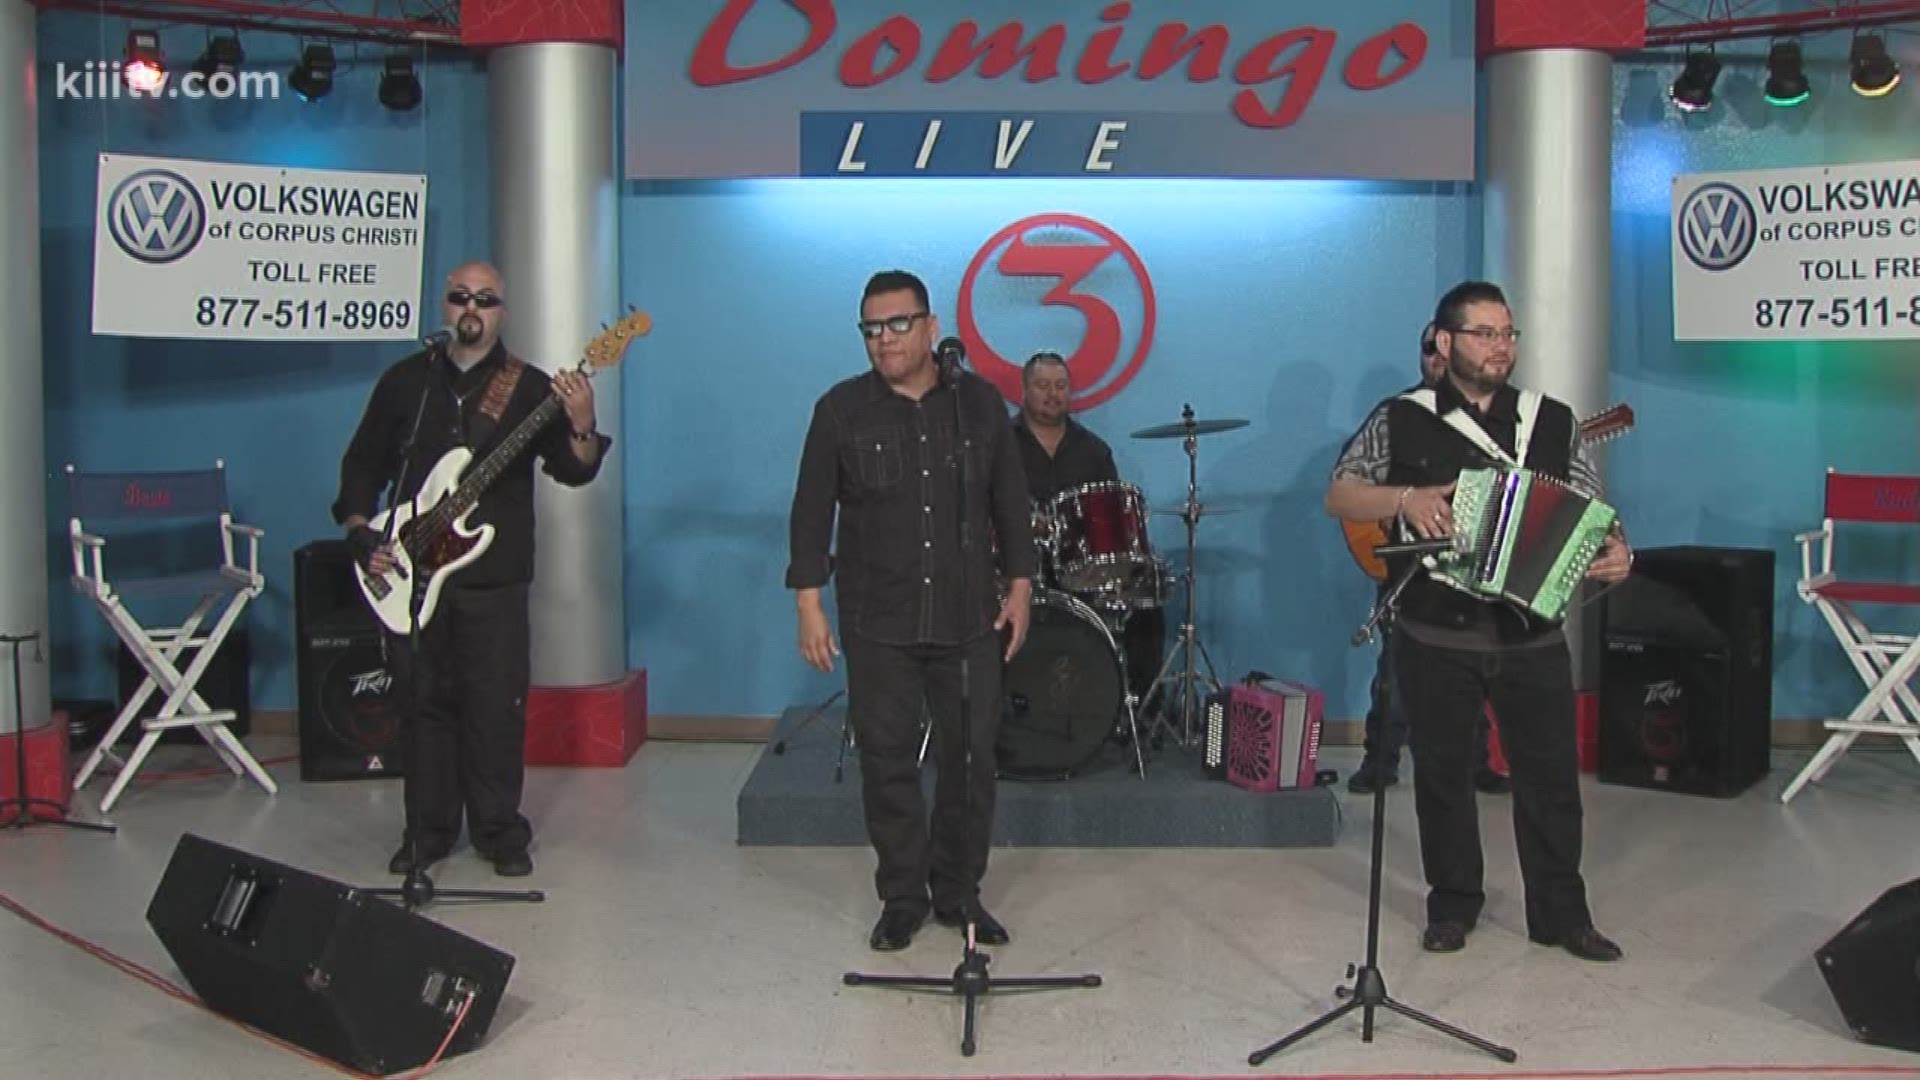 Local Conjunto Band from Corpus Christi, Tremendos Cinco, performing "El Cobarde" on Domingo Live.